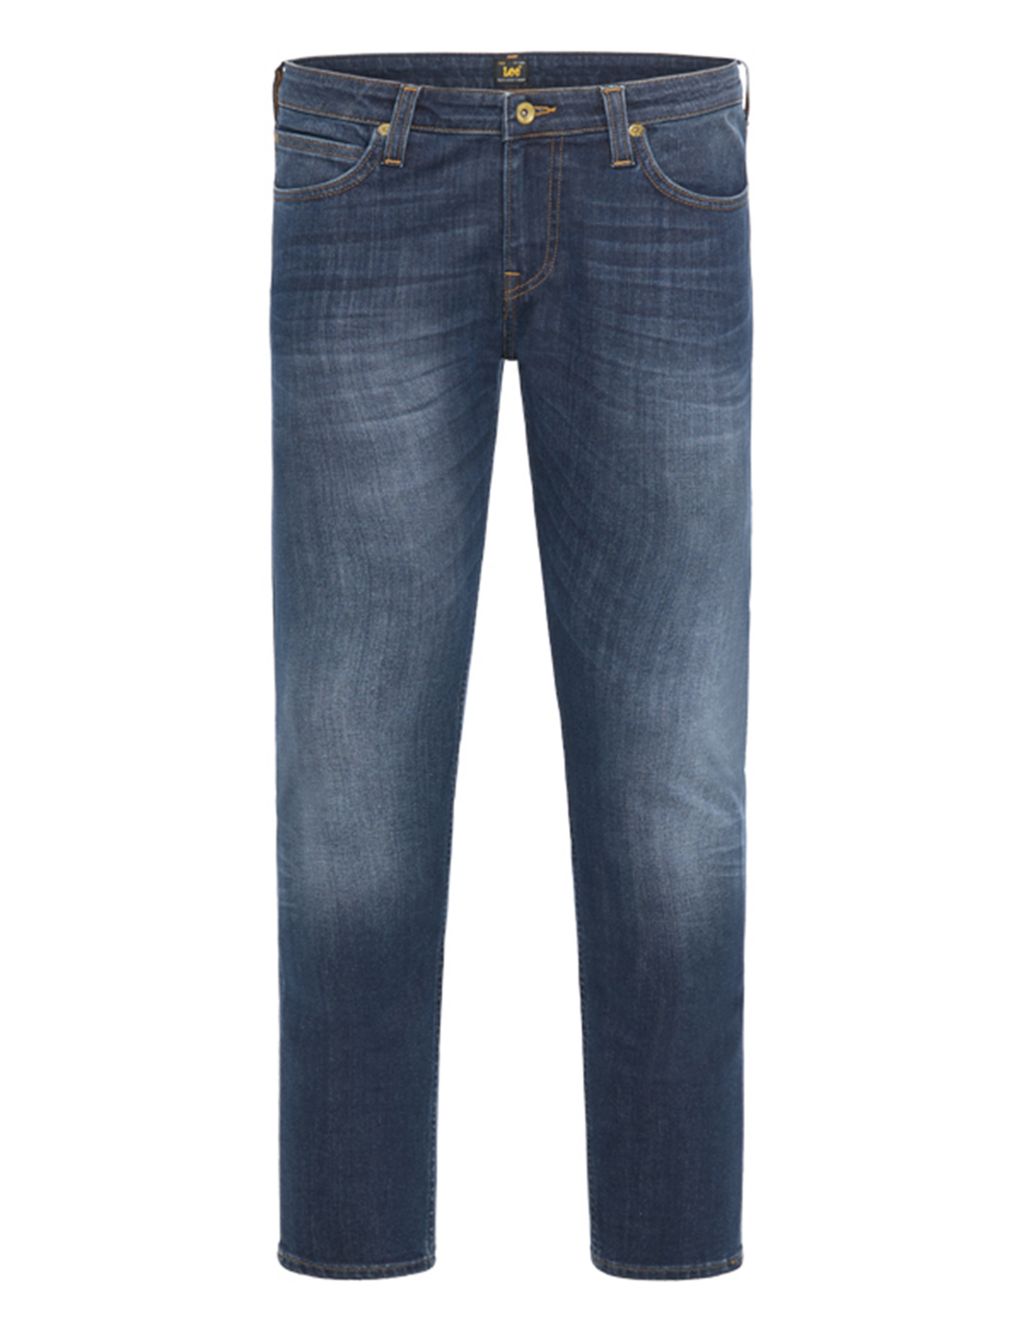 Luke Slim Tapered Fit Jeans image 2